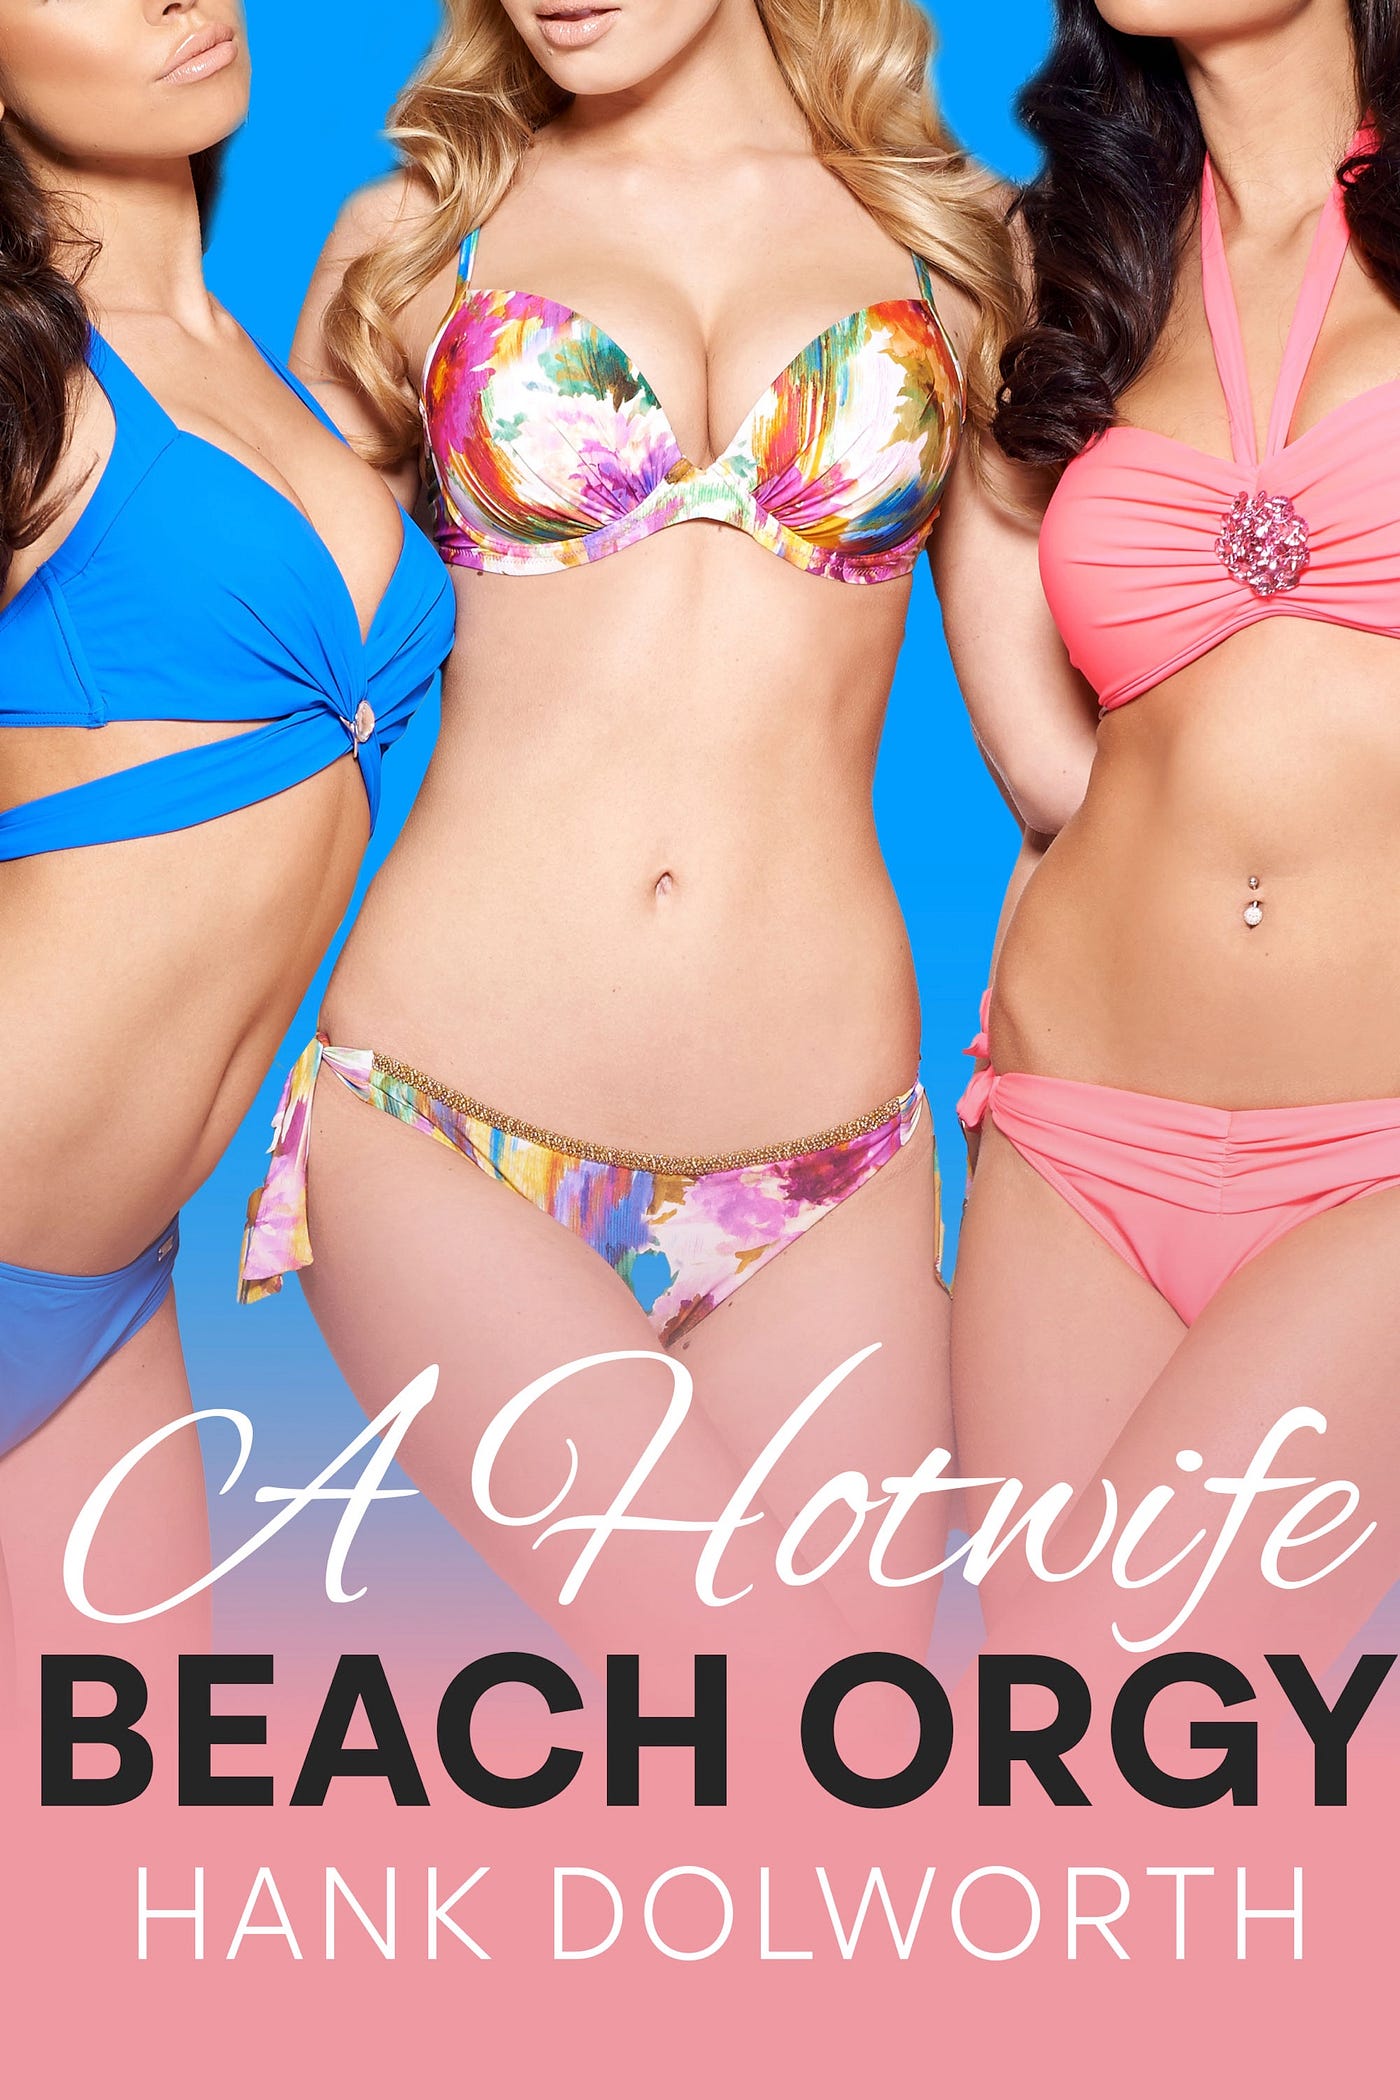 A Hotwife Beach Orgy (Christi) picture picture